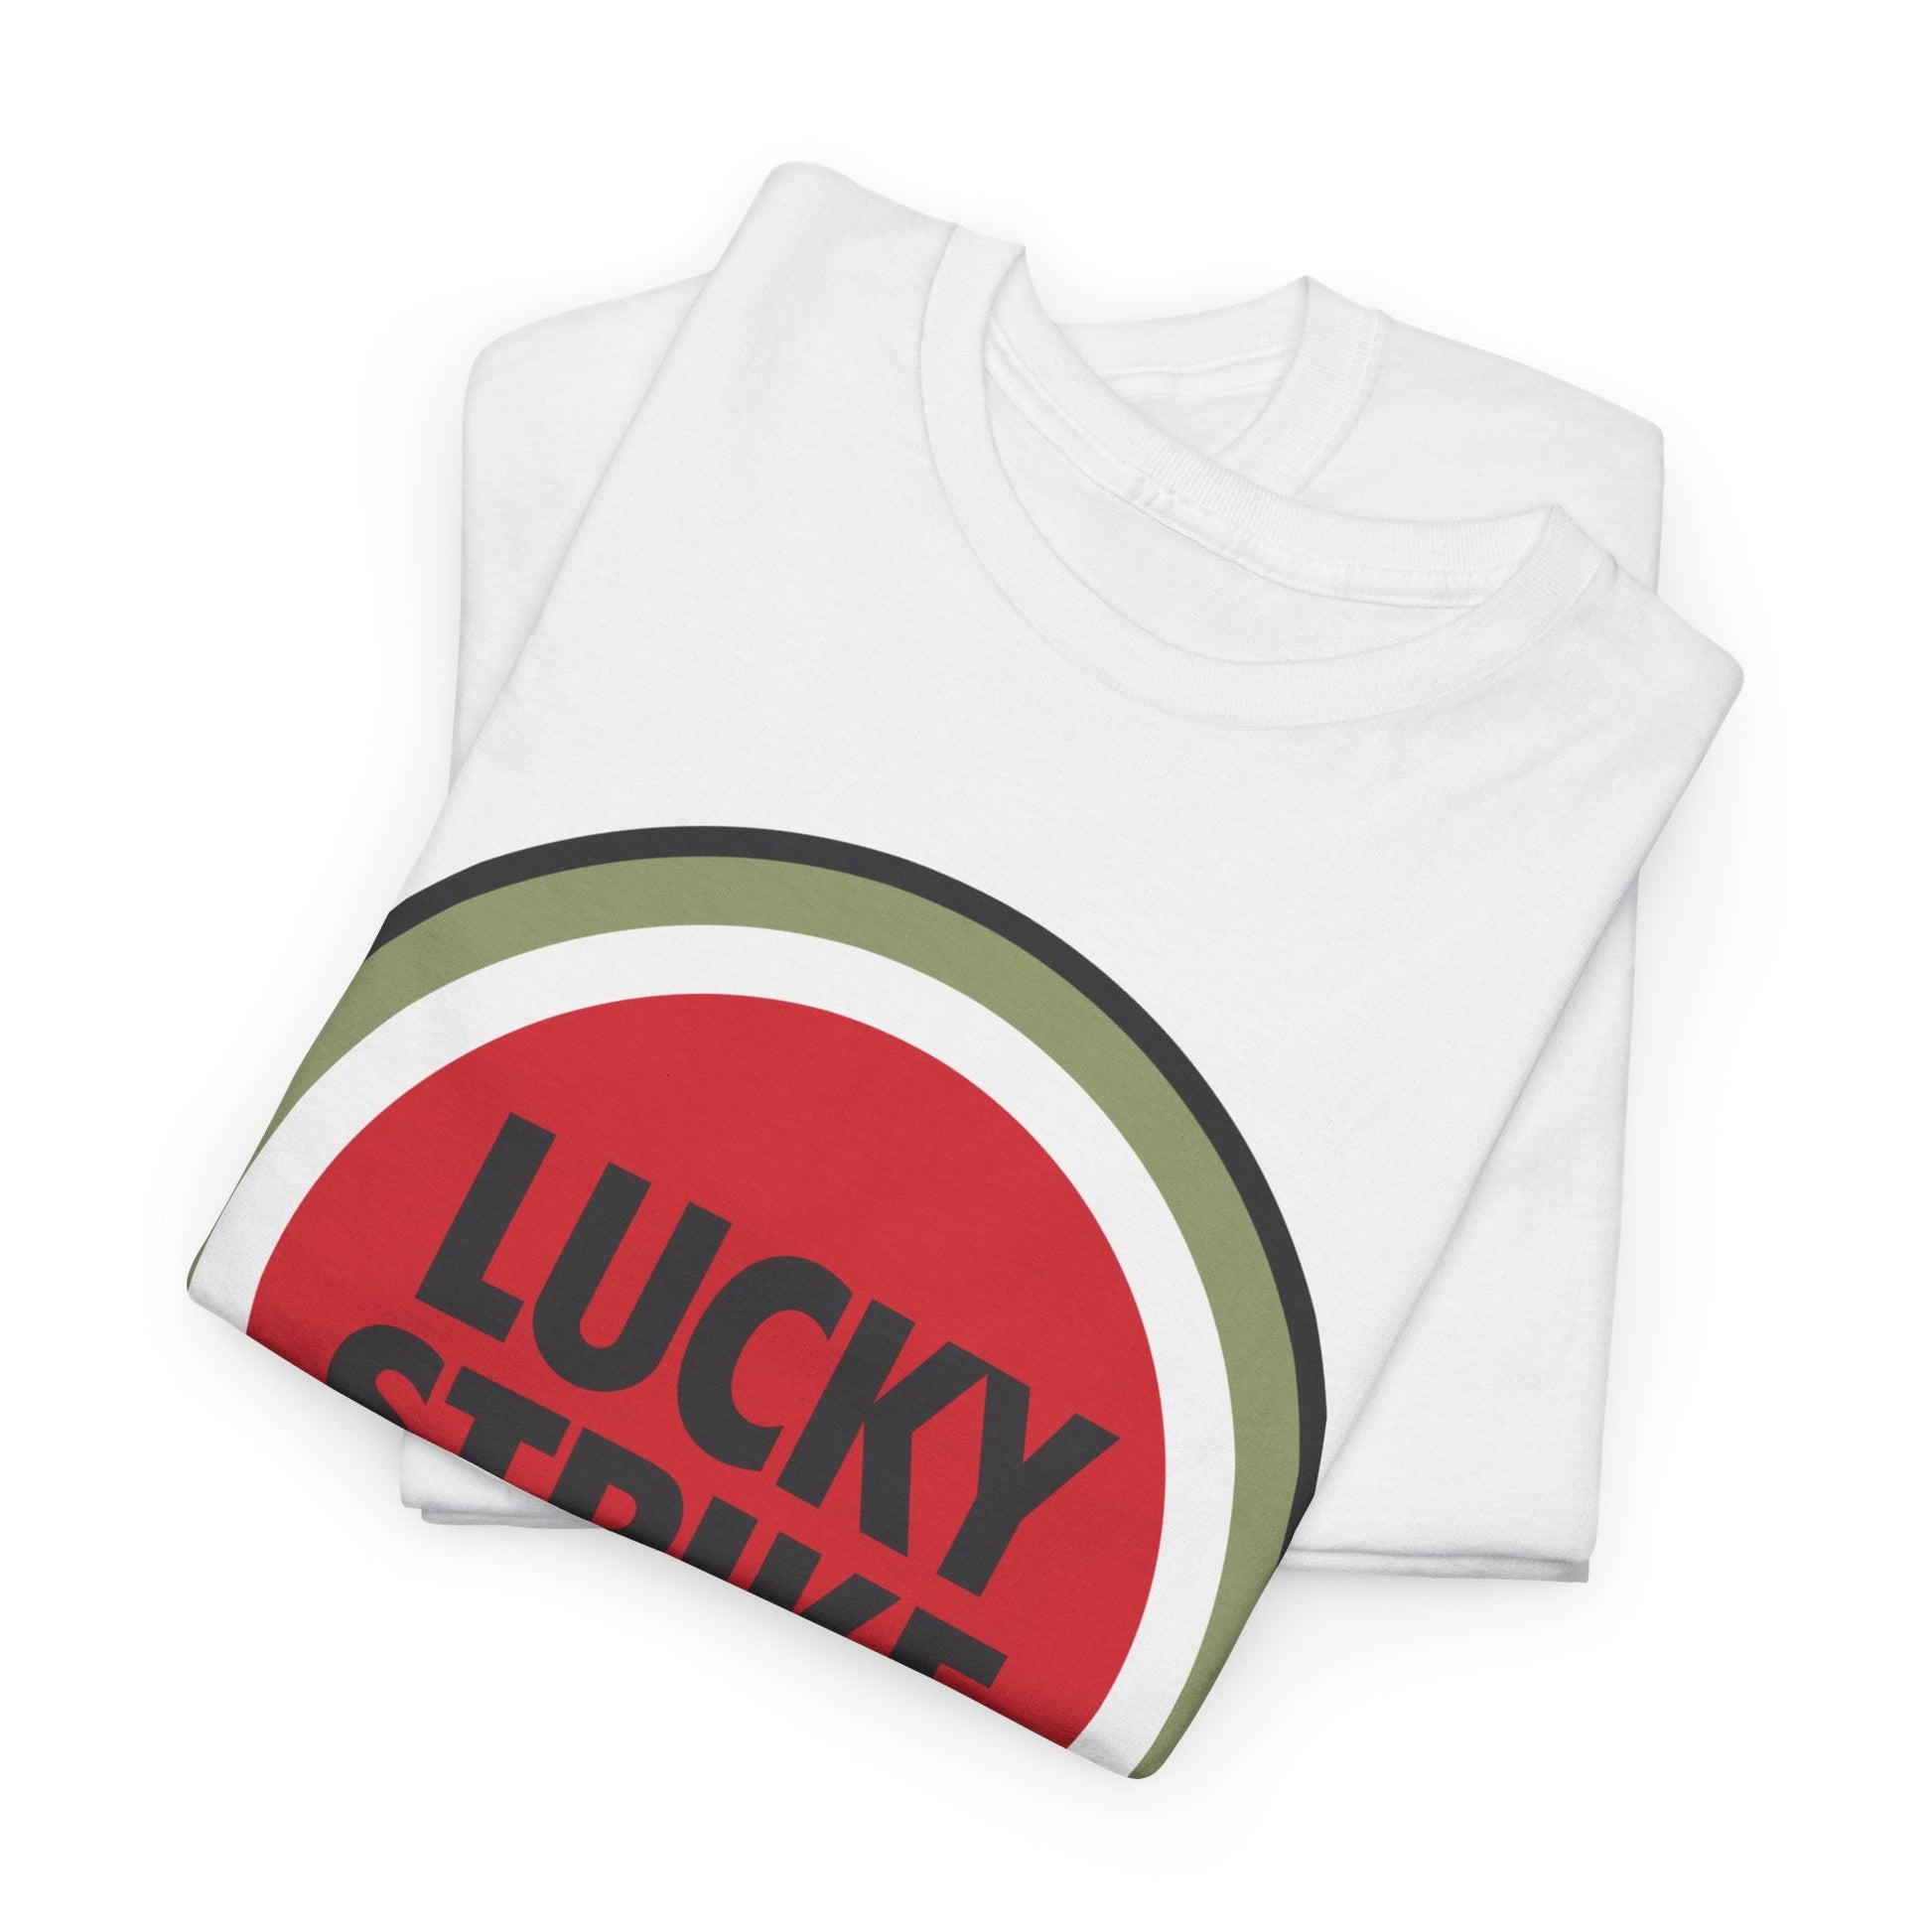 Vintage Lucky Strike Cigarette T-Shirt - RetroTeeShop